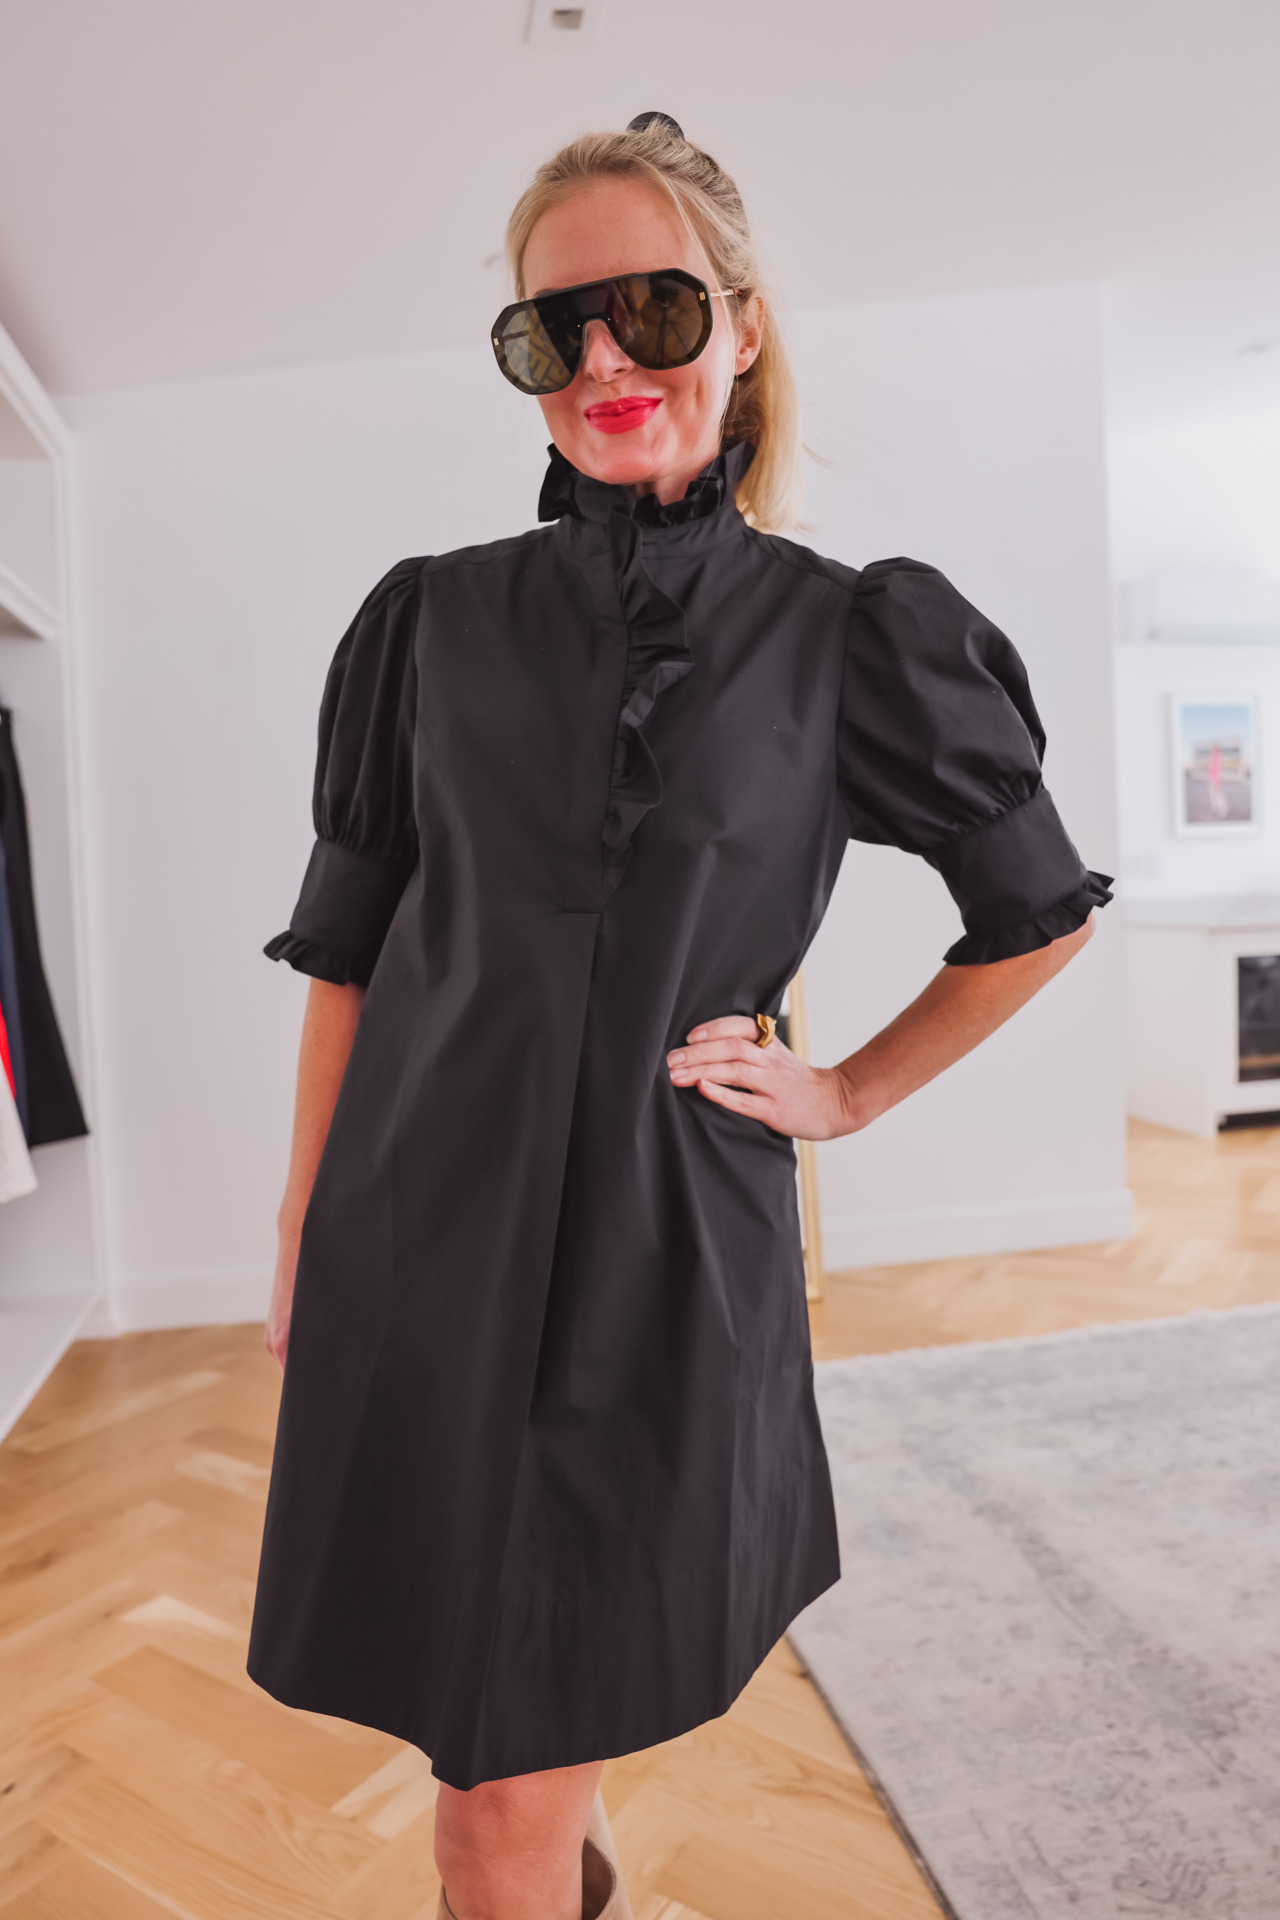 Little Black Dress over 40 style